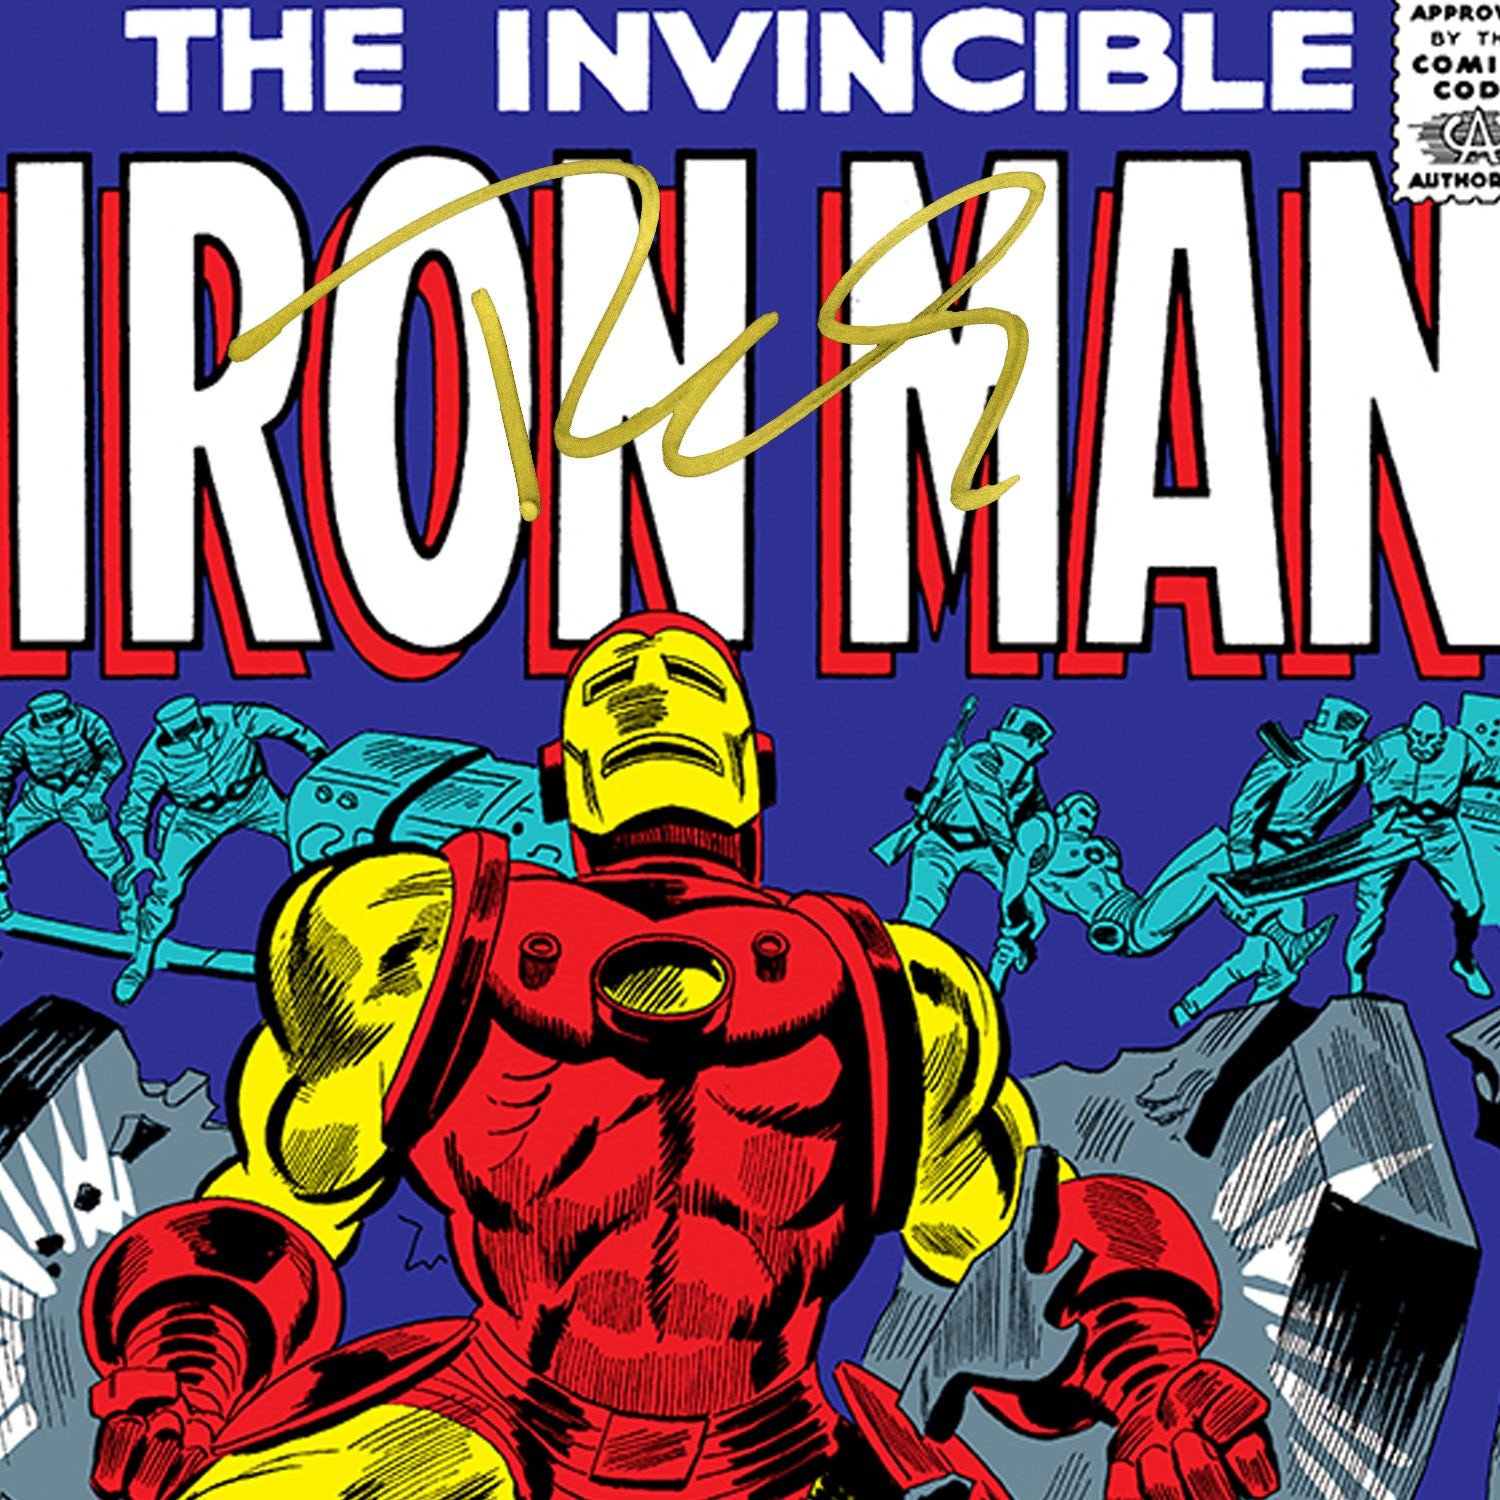 The Invincible: Art Book & Comic Book on